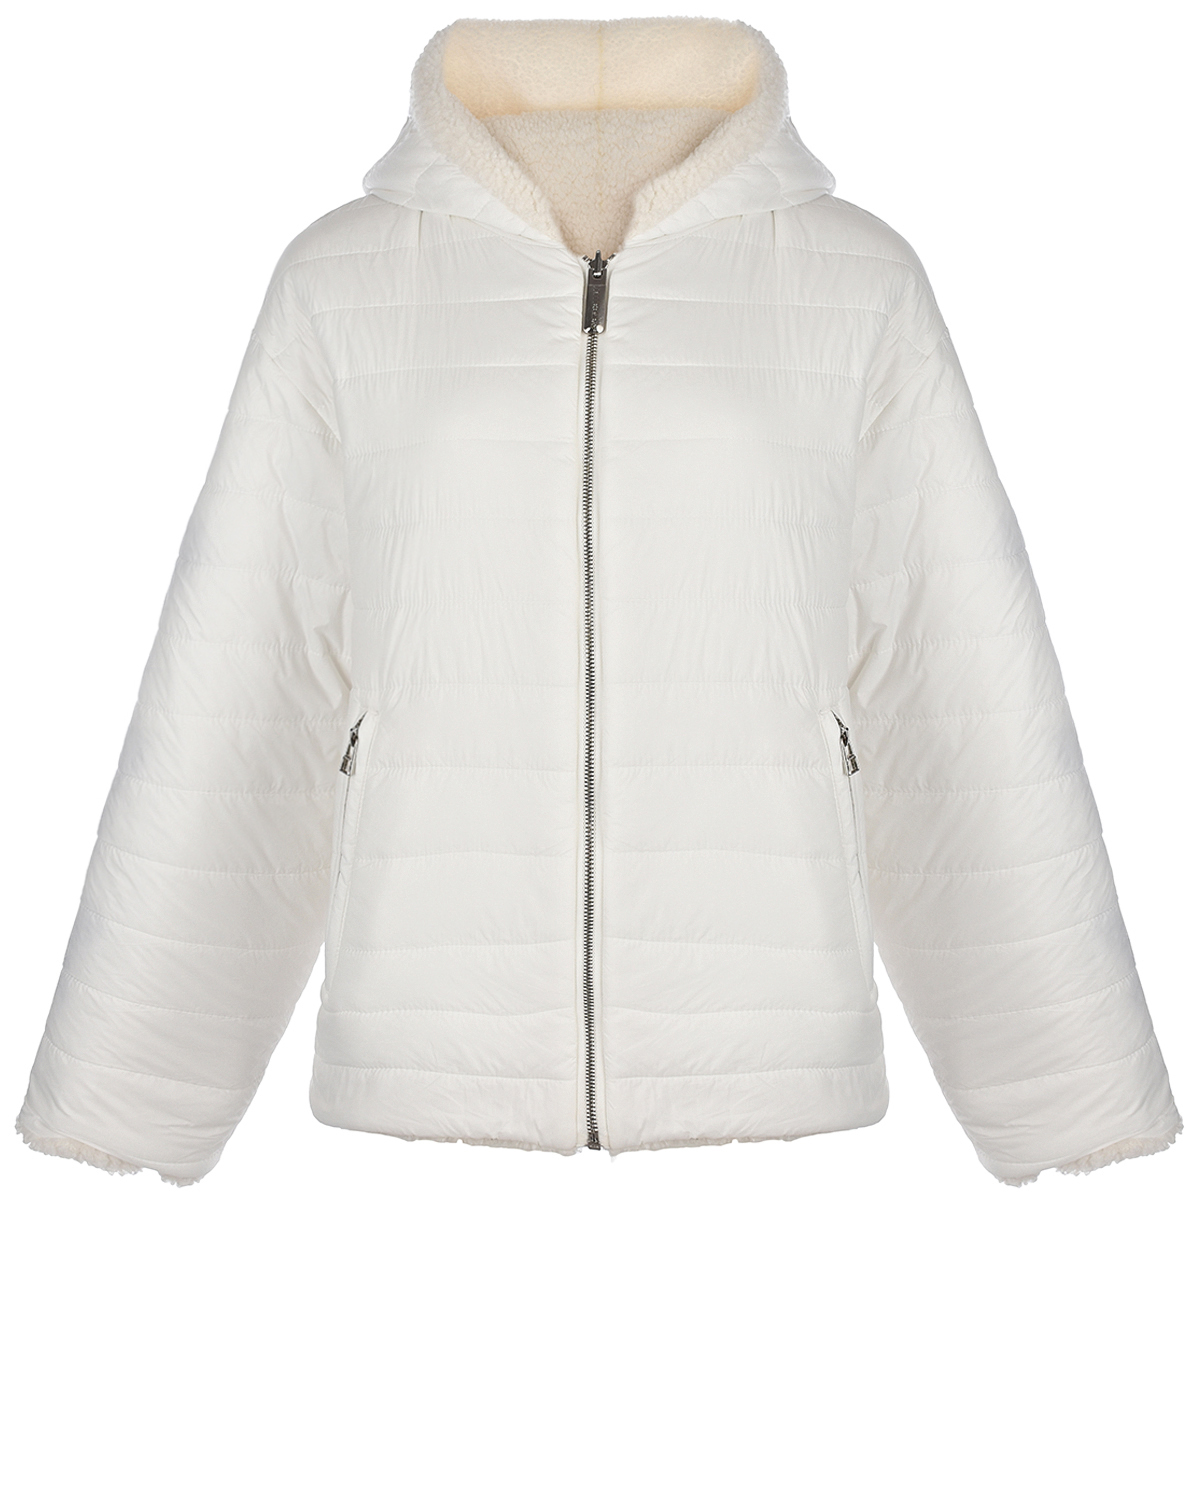 Двухсторонняя белая куртка Freedomday, размер 42, цвет белый - фото 2